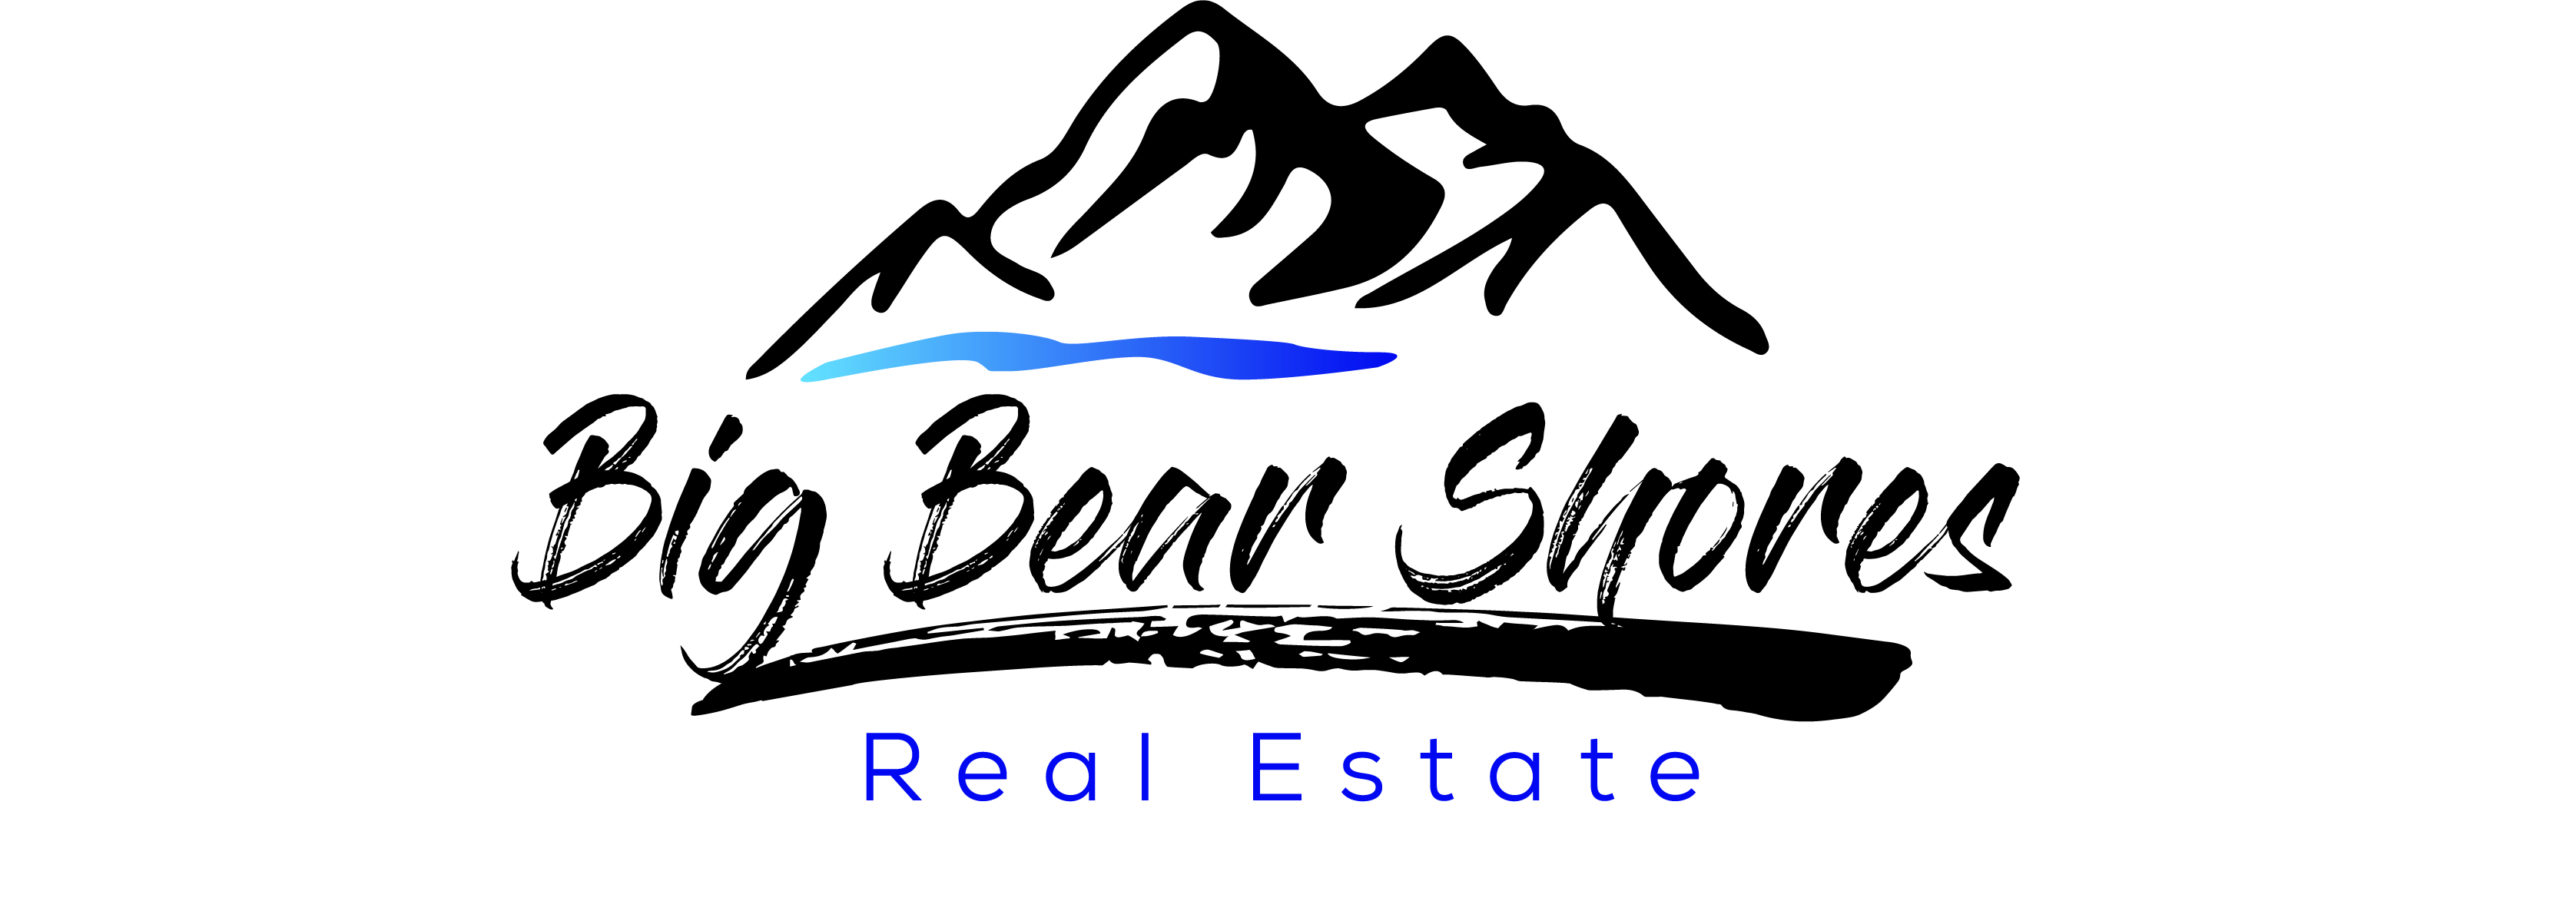 Big Bear Shores Real Estate